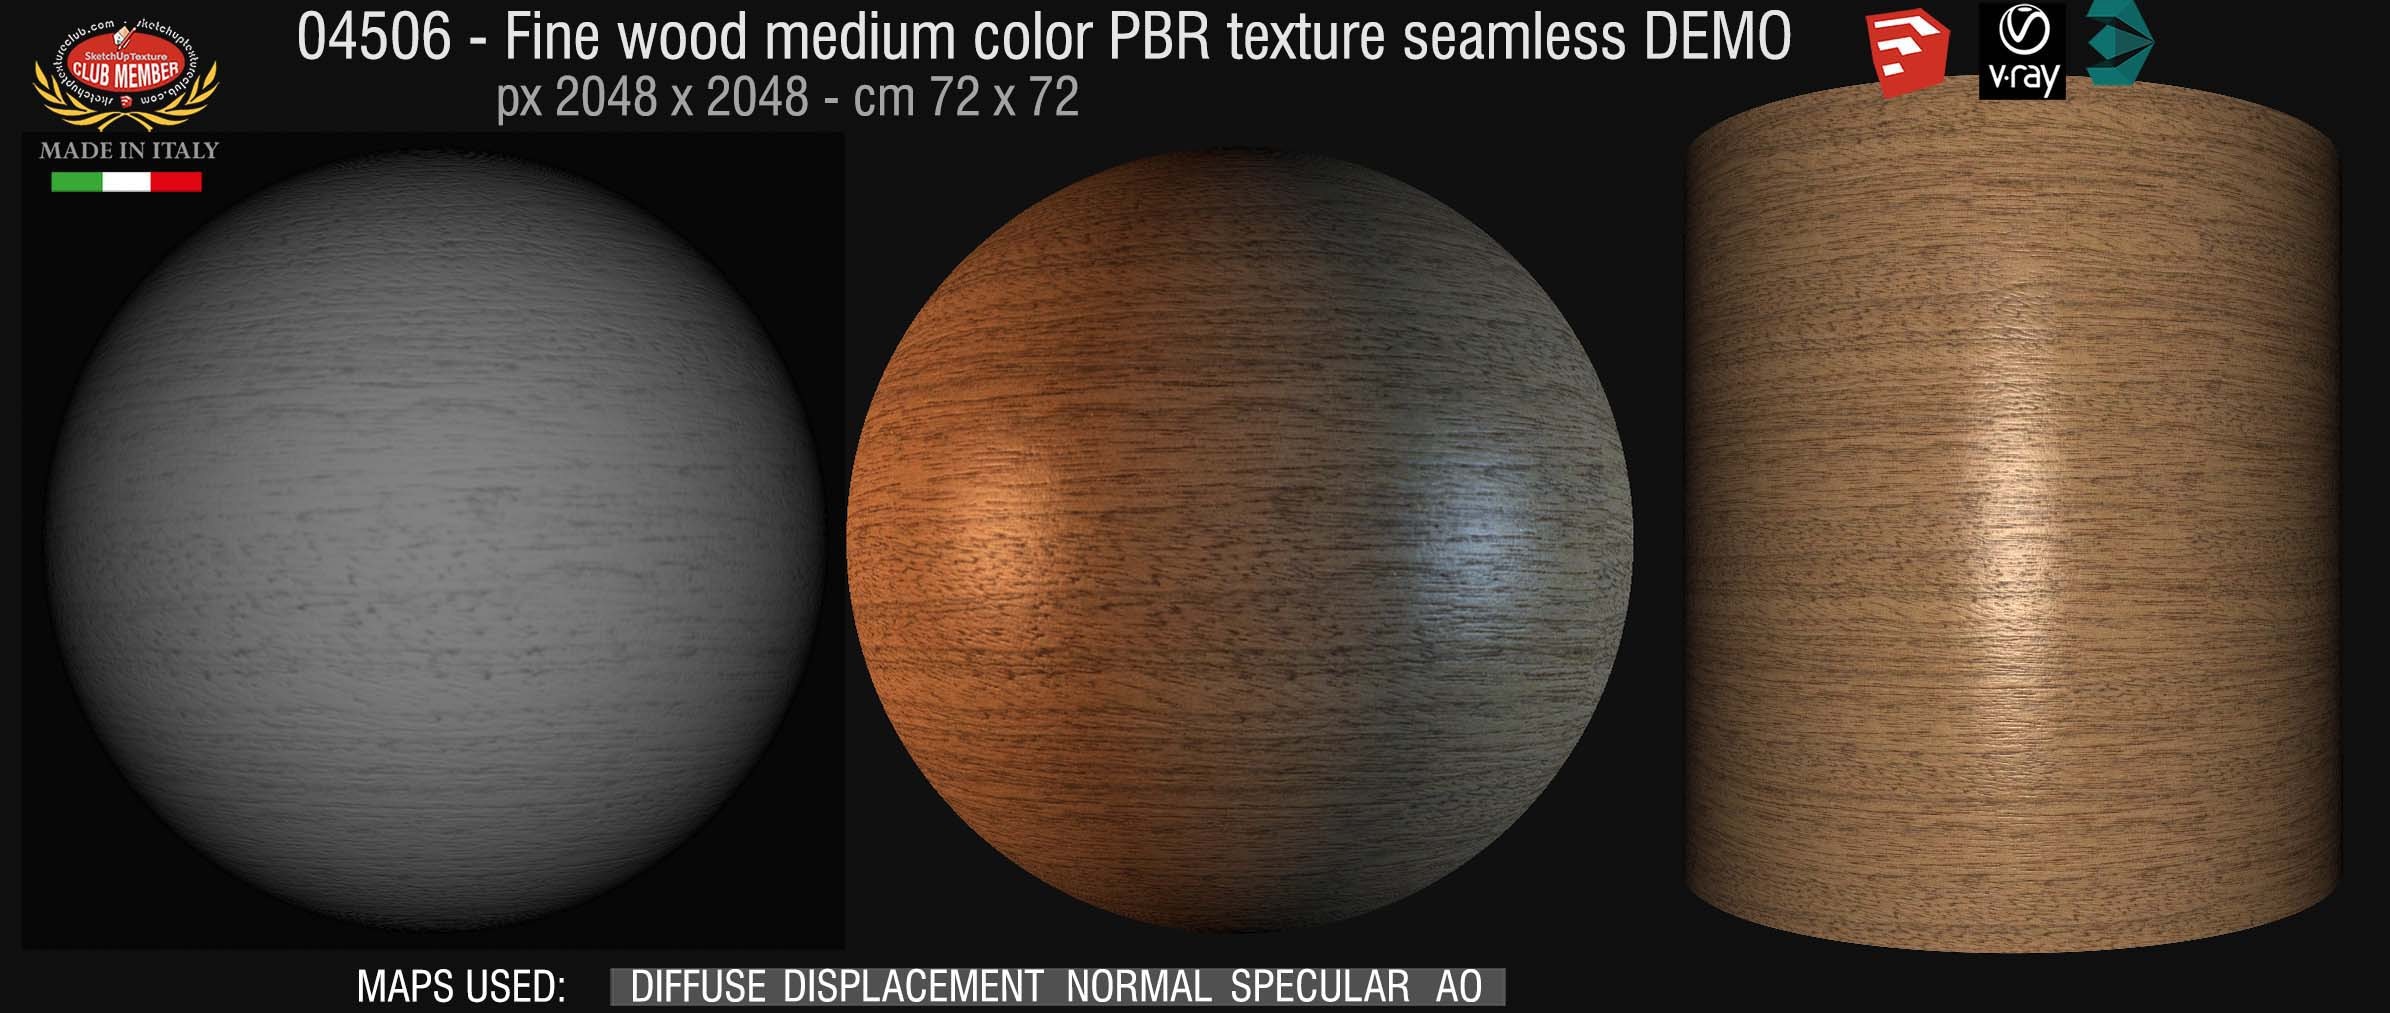 04506 fine wood medium color PBR texture seamless DEMO